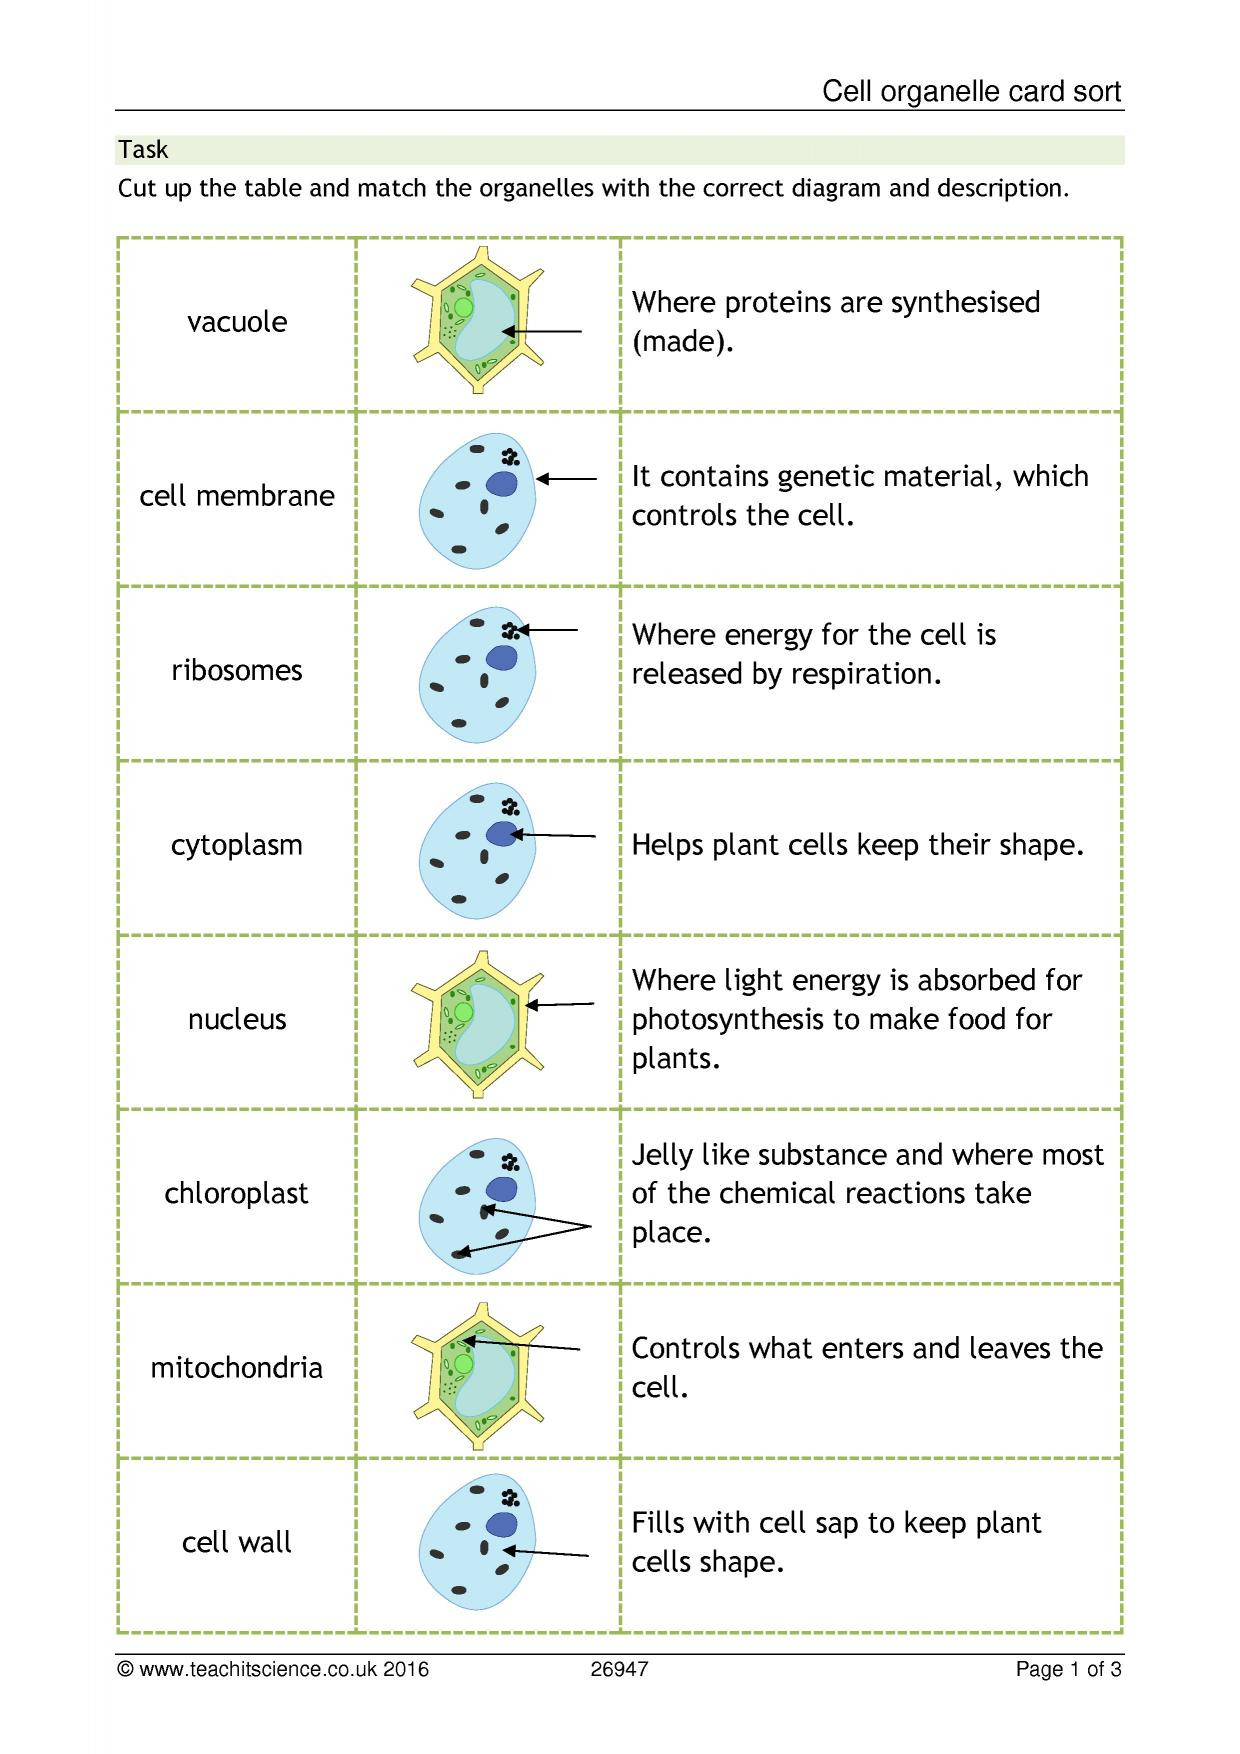 Cells and organelles Worksheet Cell organelle Card sort